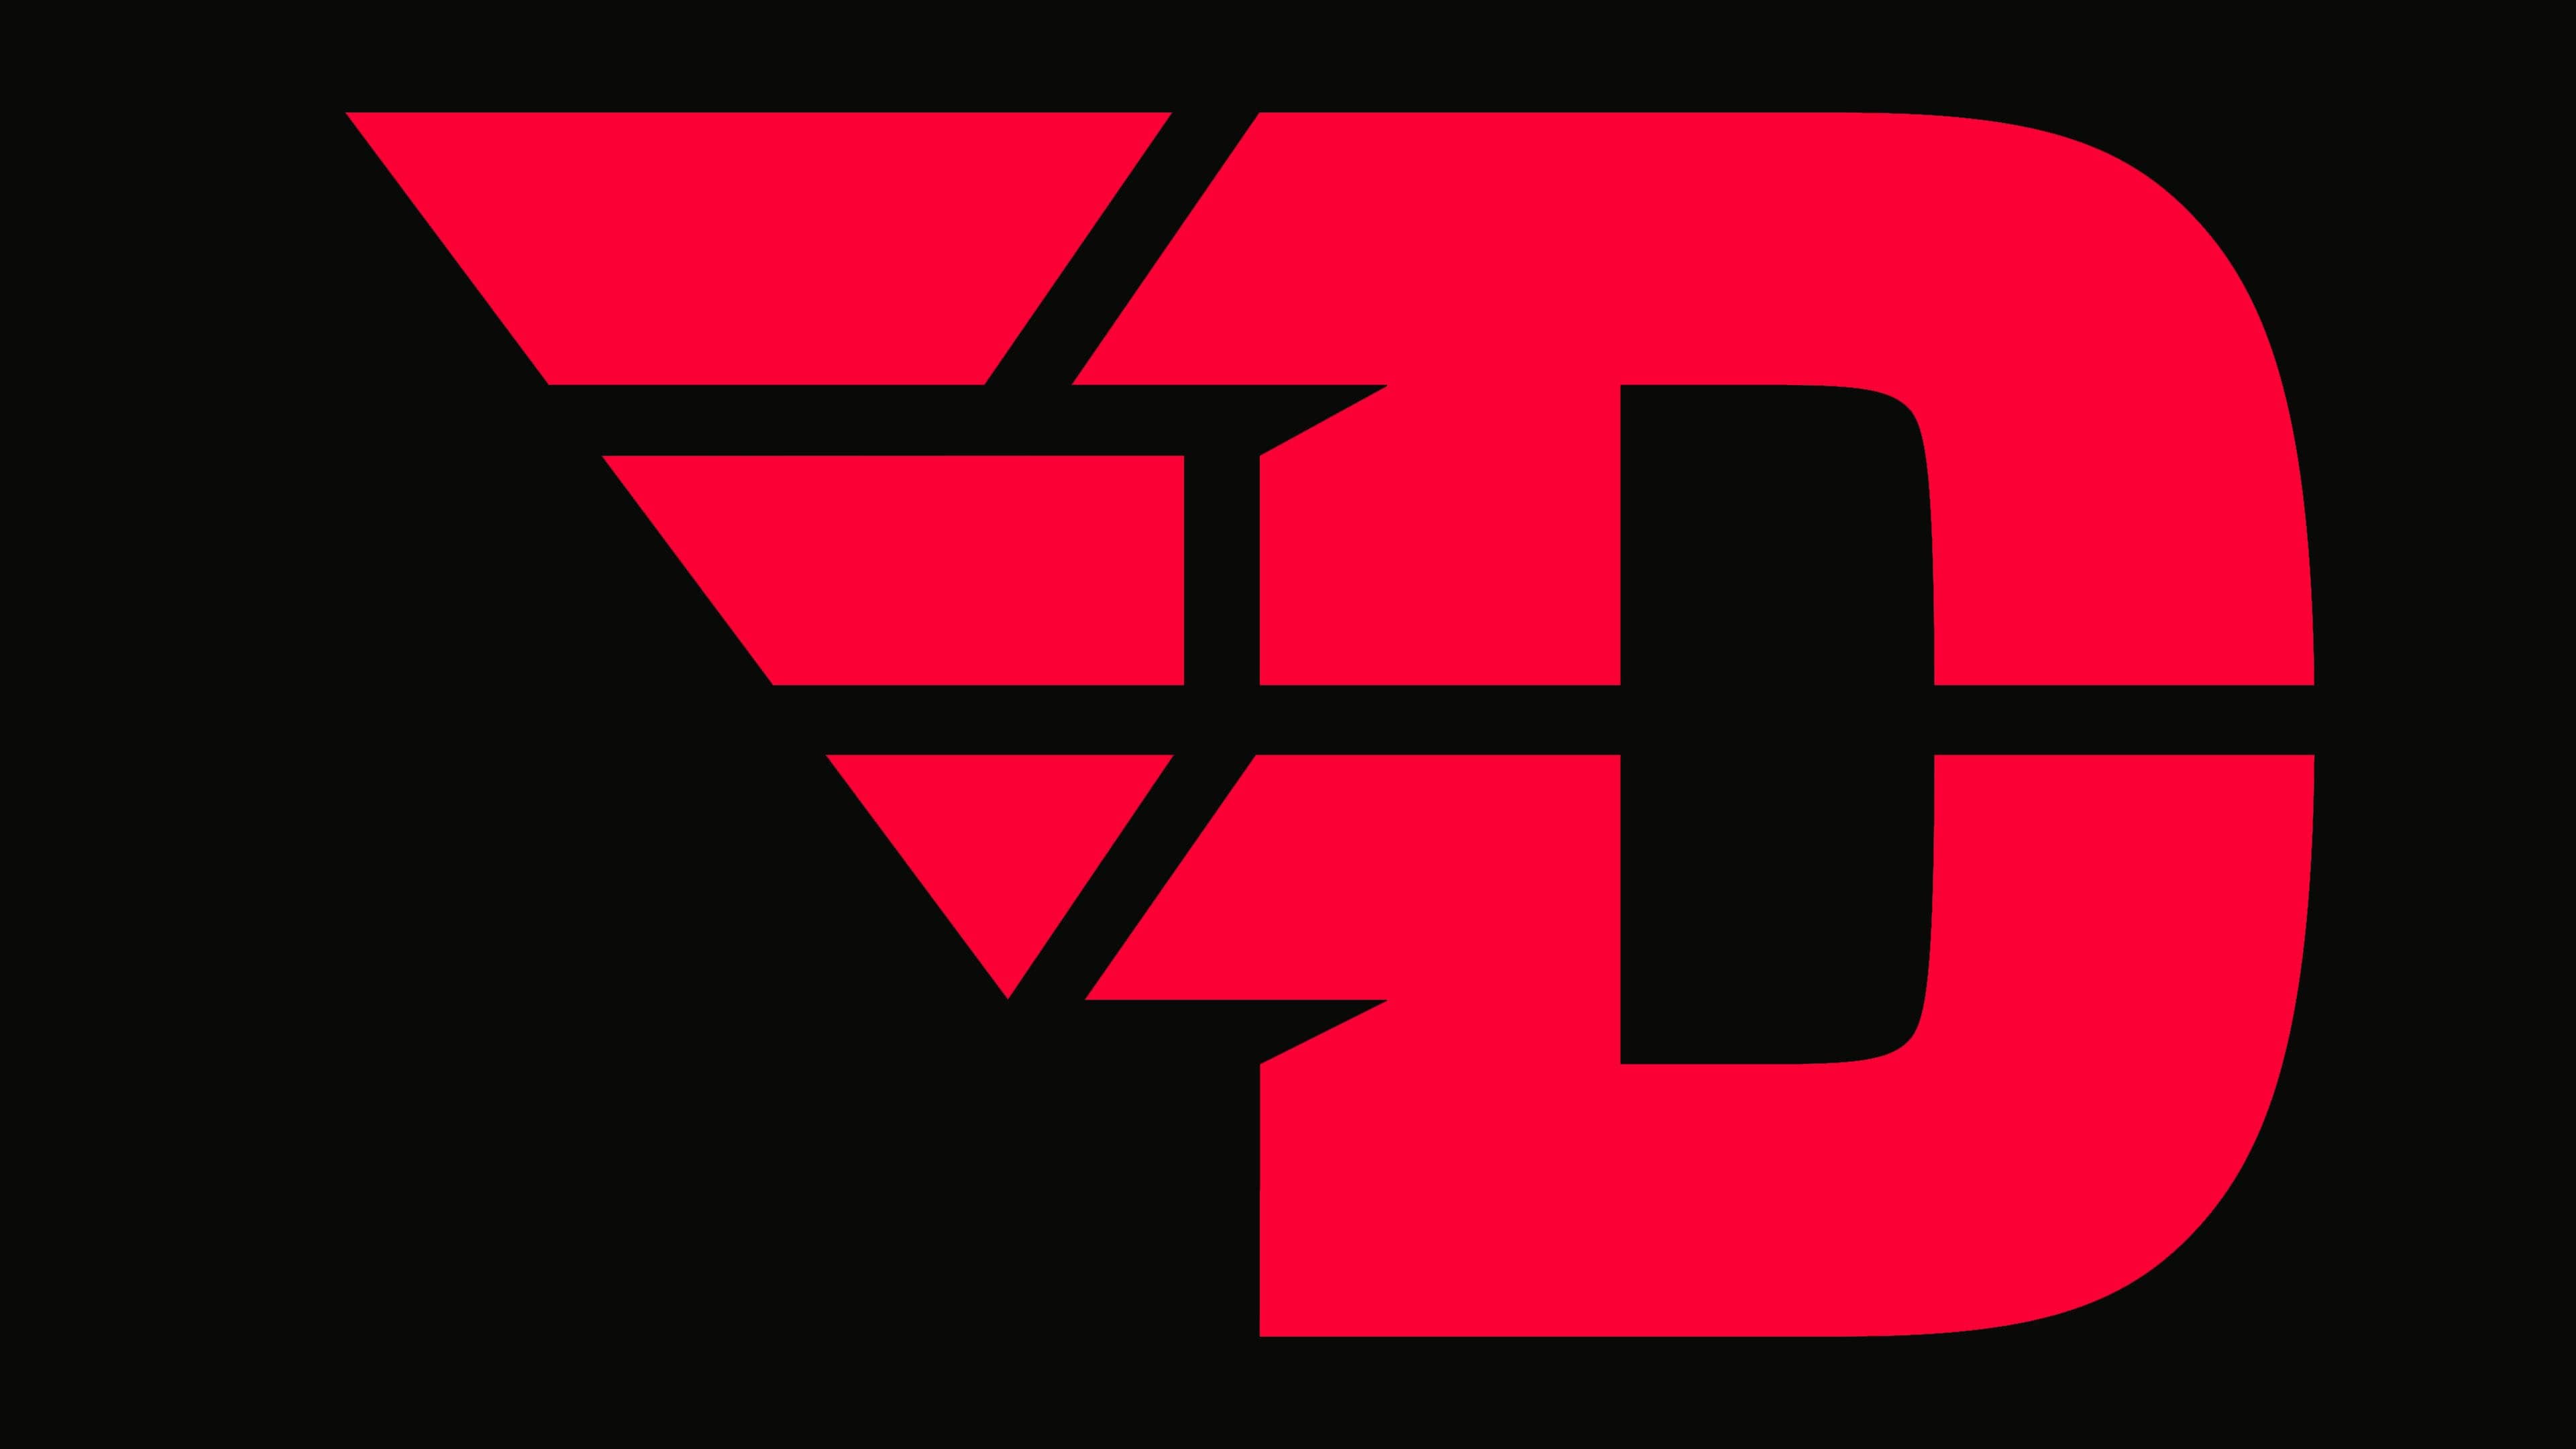 Dayton Flyers Logo, symbol, meaning, history, PNG, brand